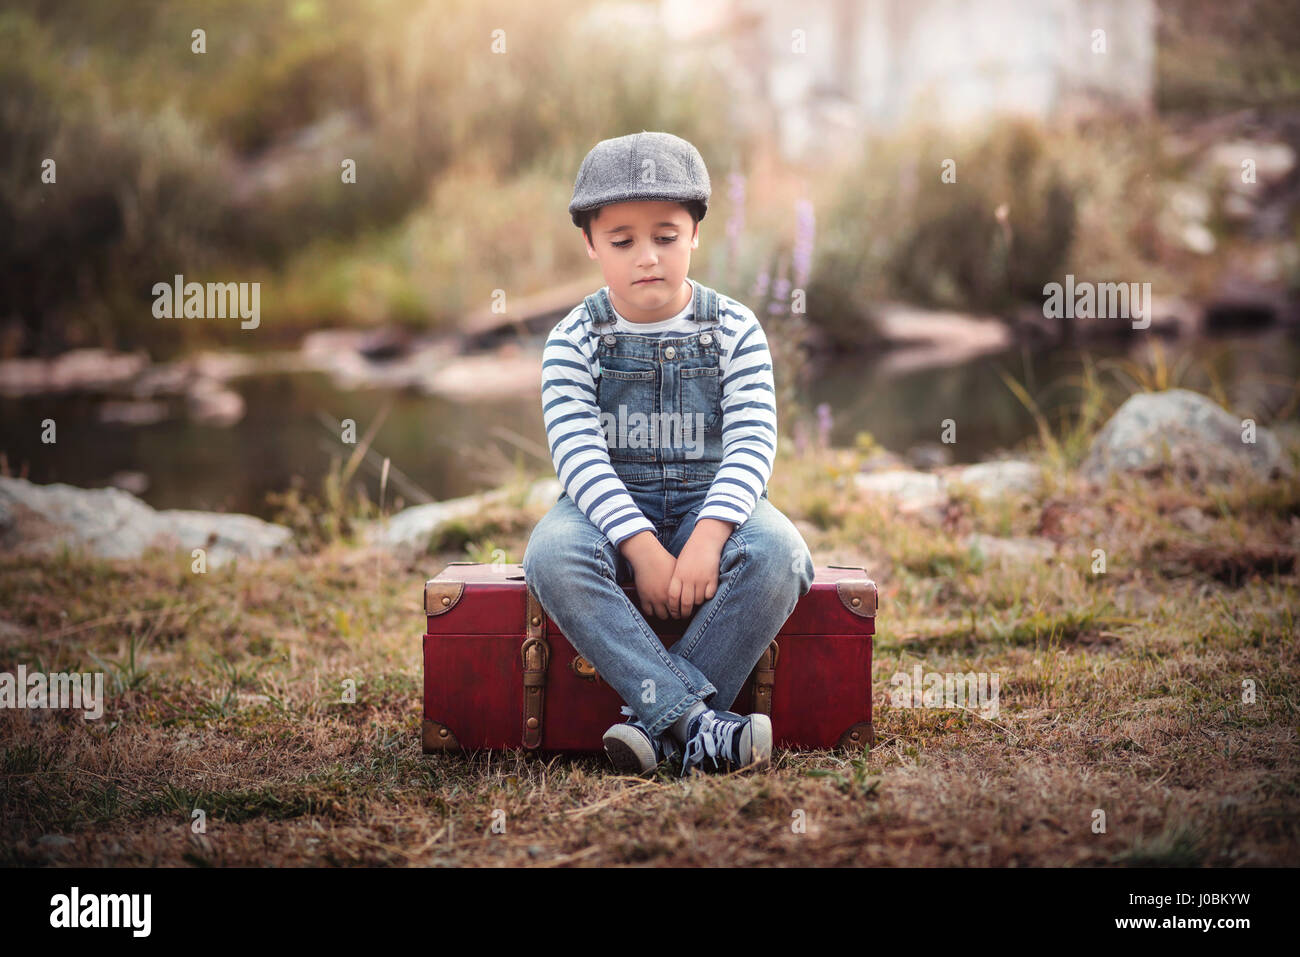 Sad child sitting in a suitcase Stock Photo - Alamy